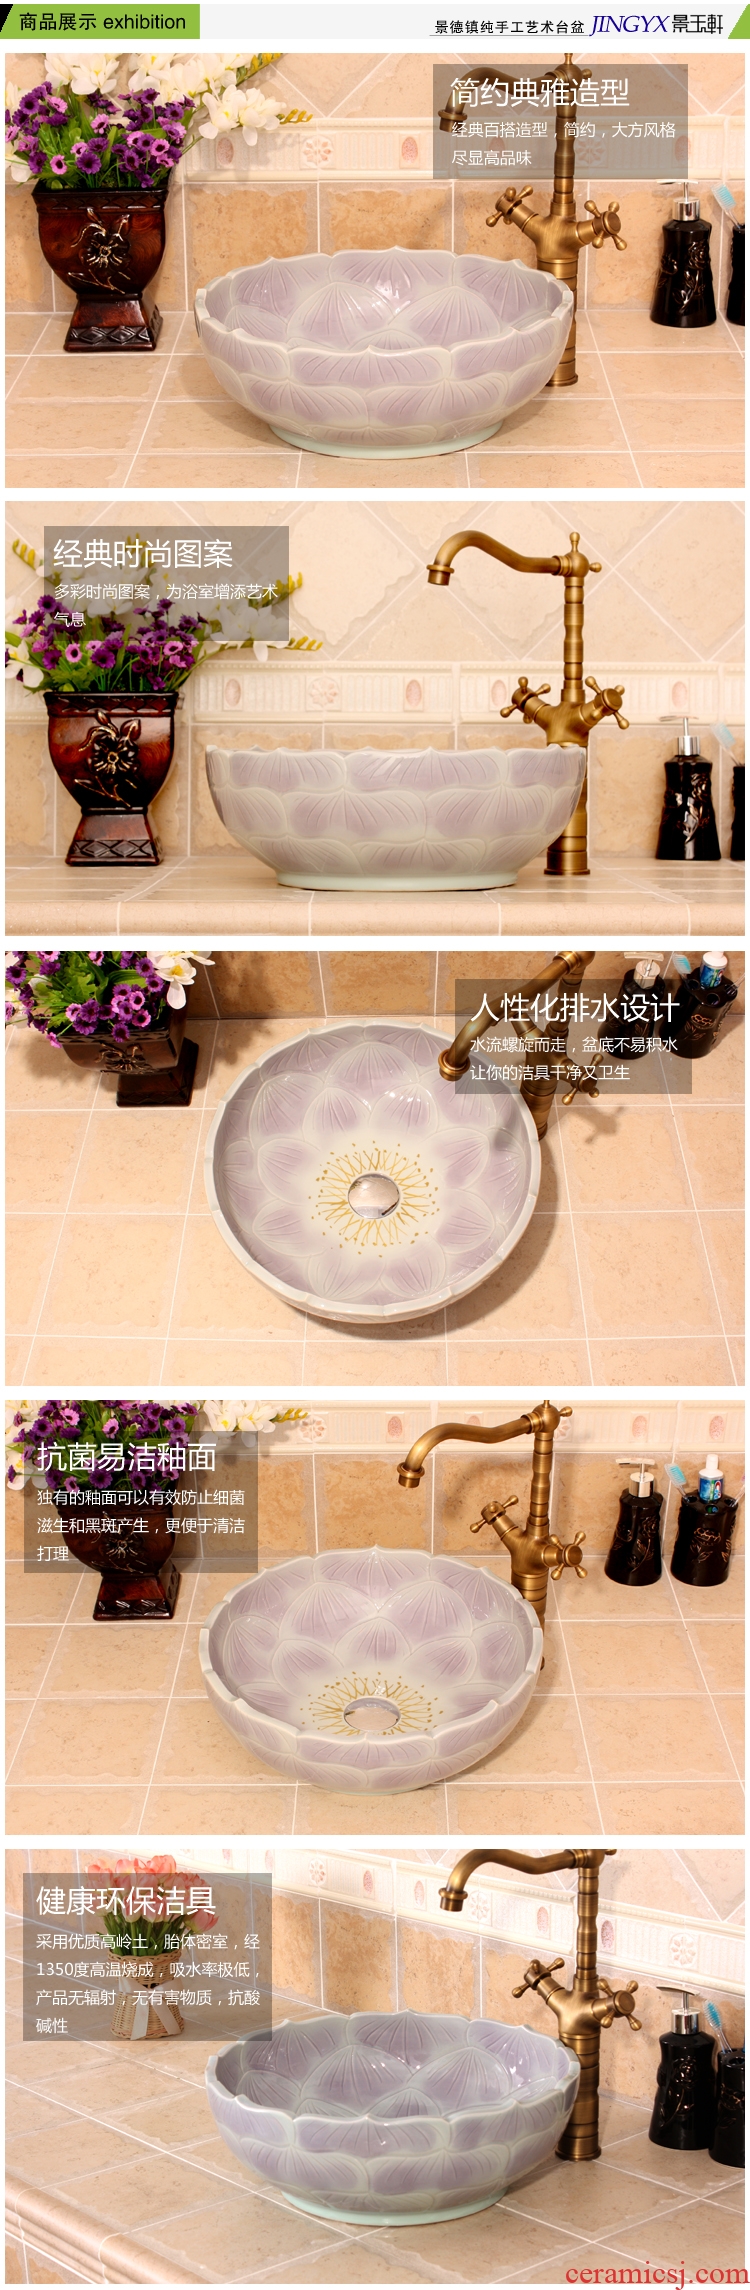 Jingdezhen ceramic lavatory basin basin art on the sink basin birdbath thousand fold lotus